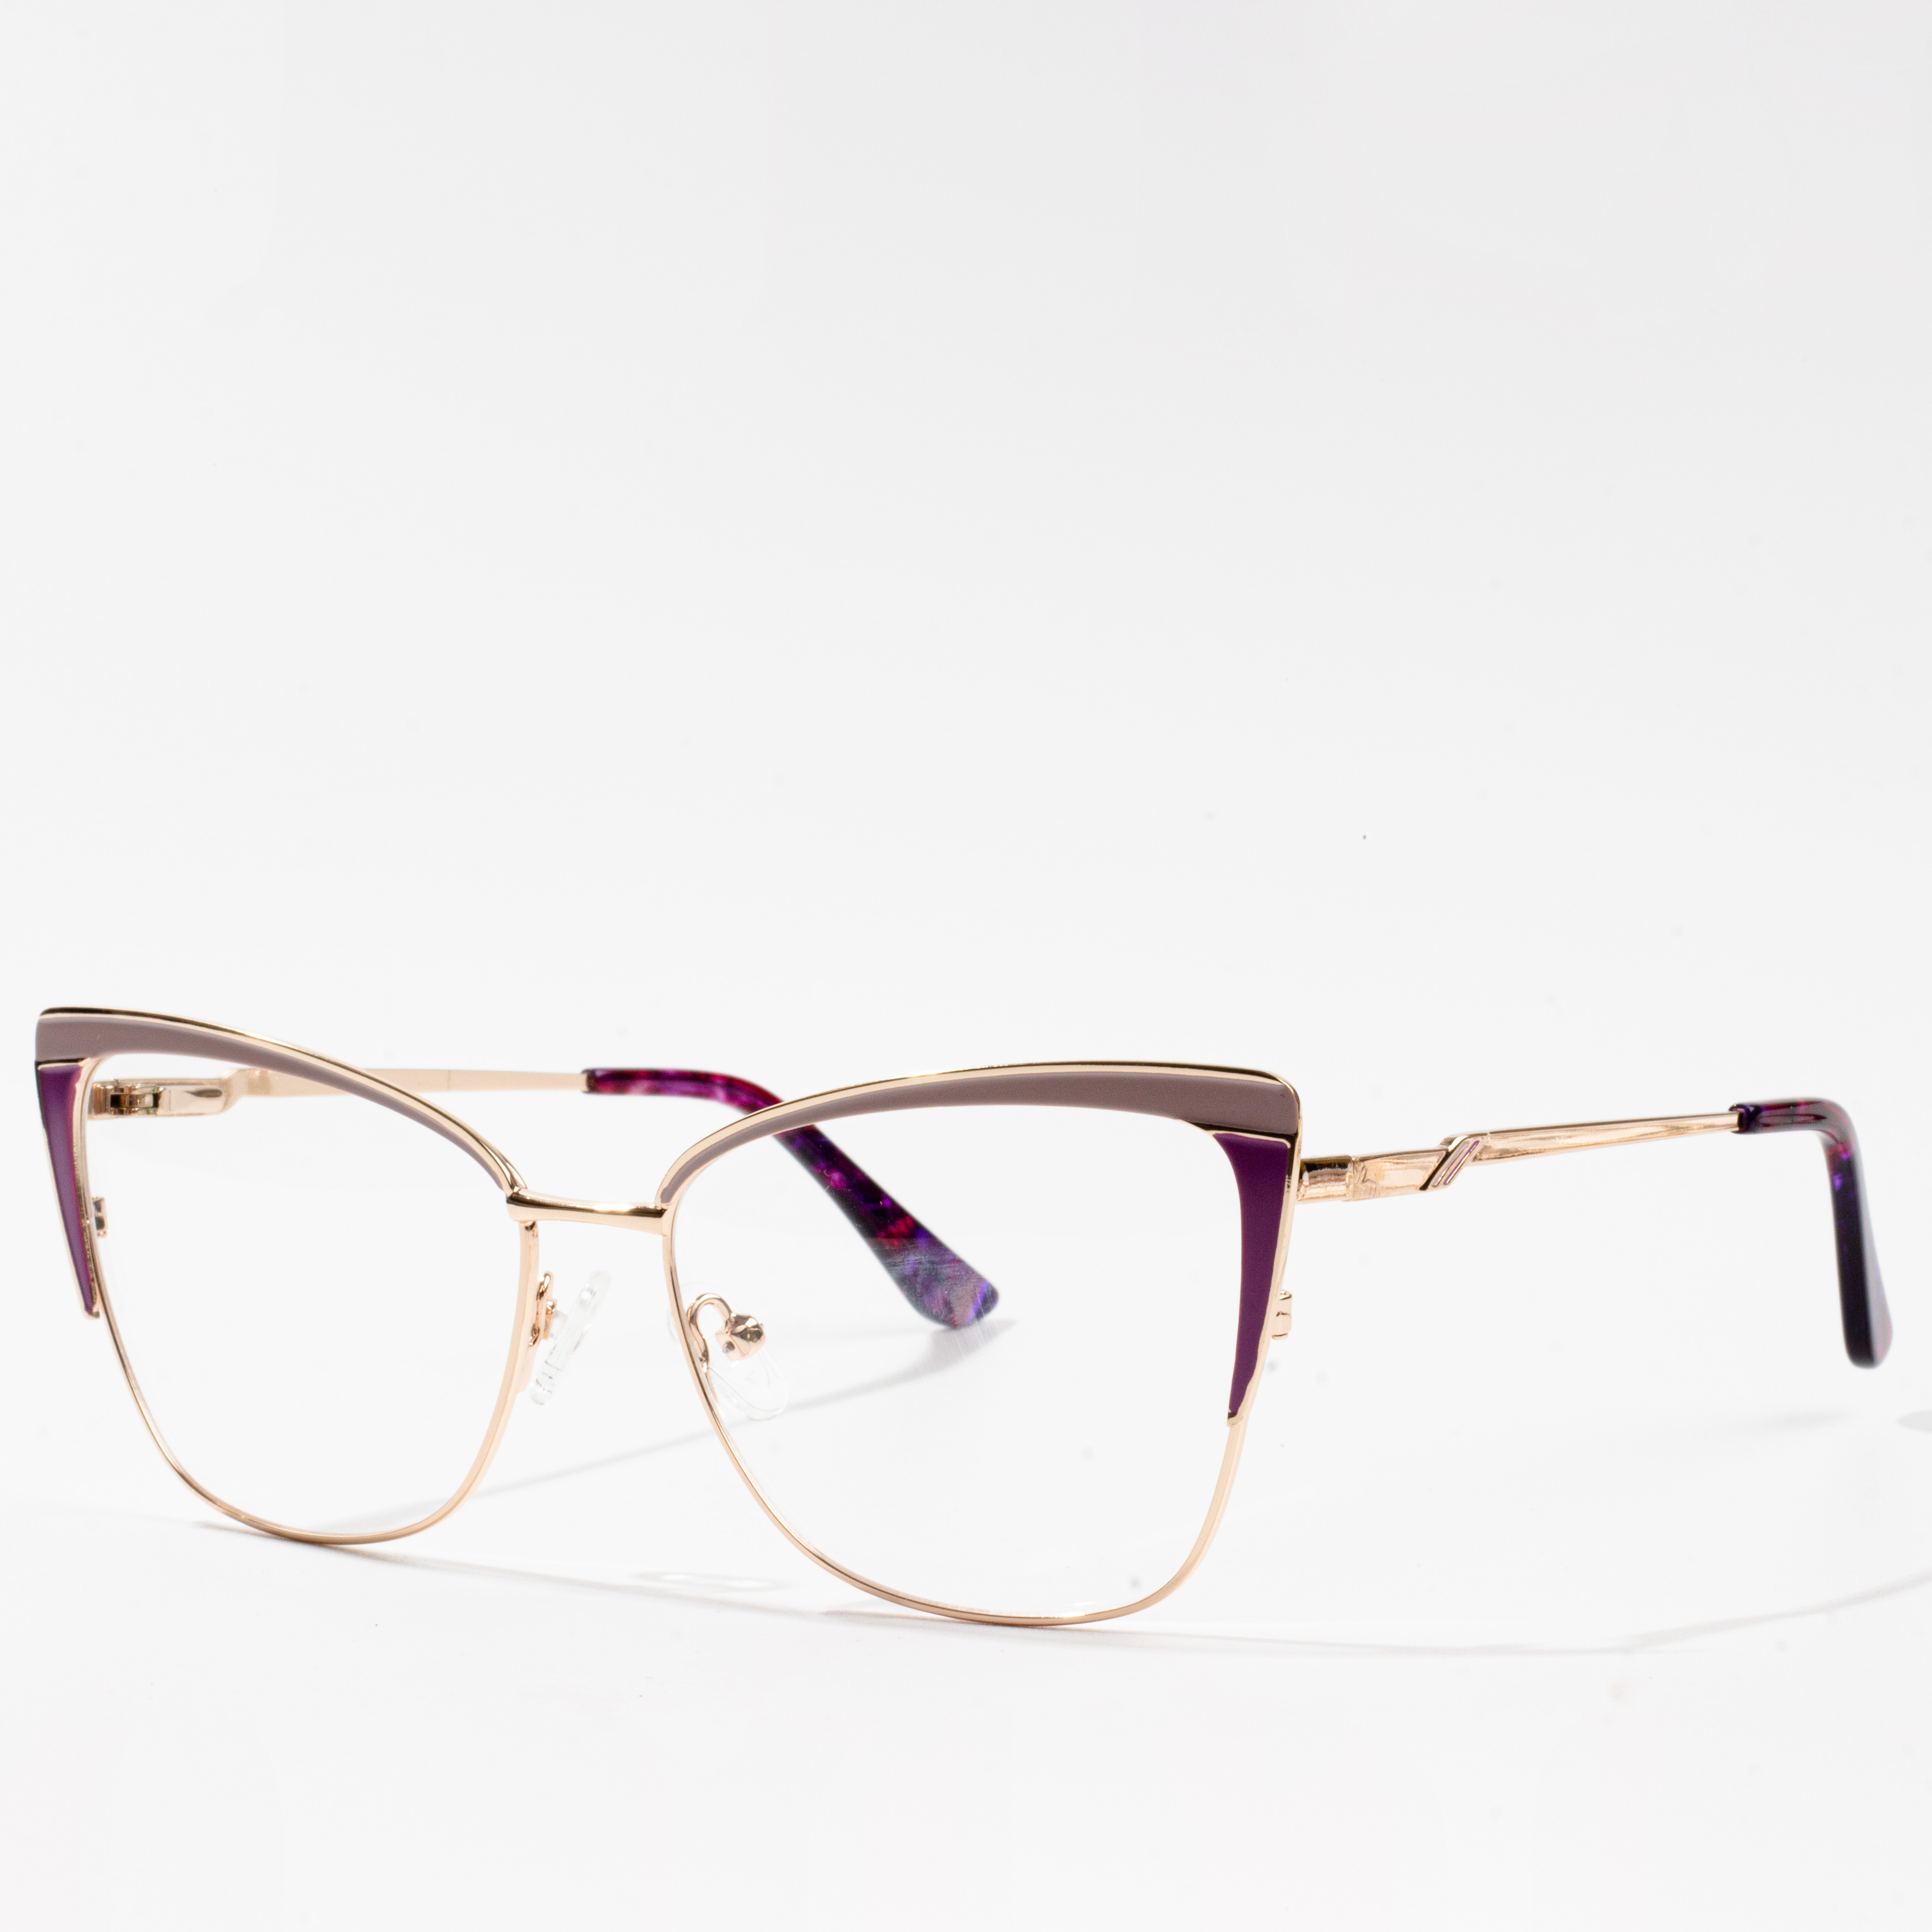 different types of eyeglass frames